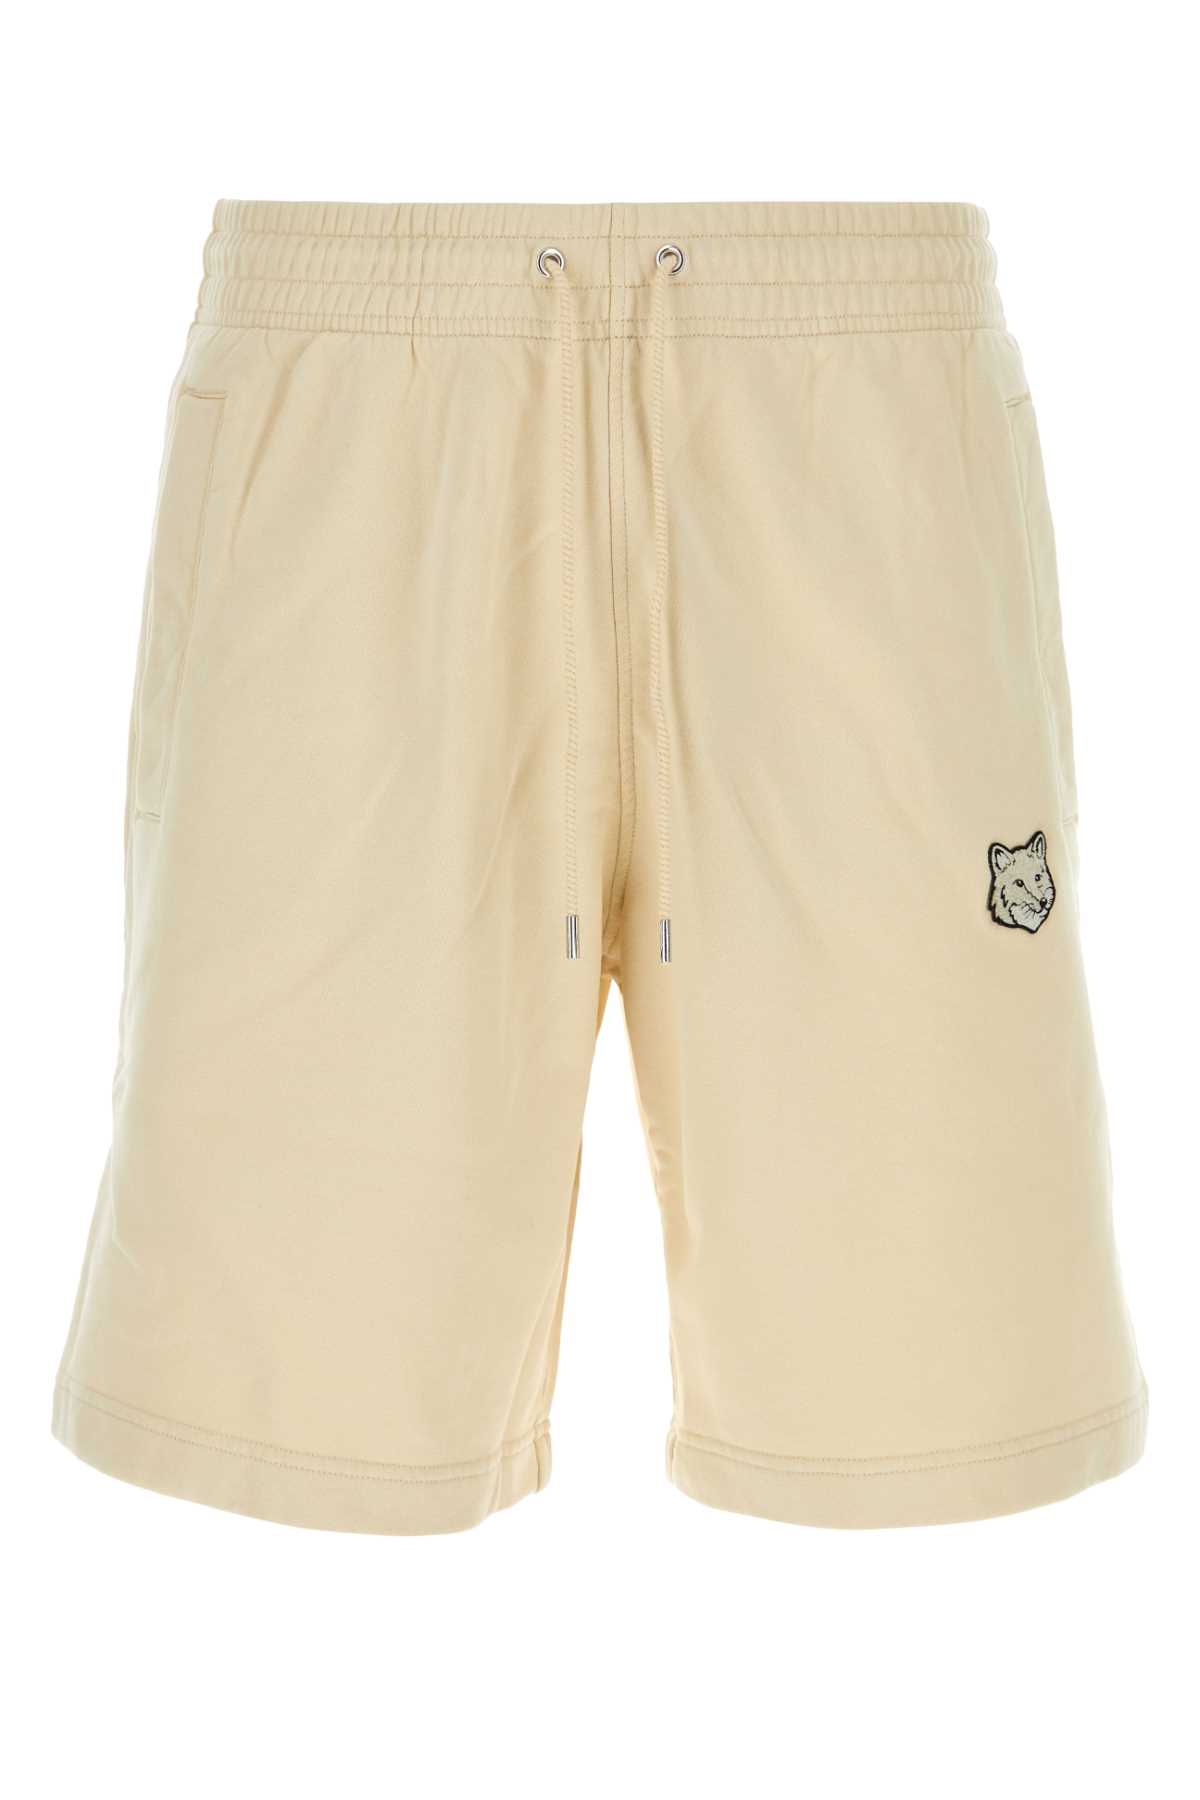 Maison Kitsuné Sand Cotton Bermuda Shorts